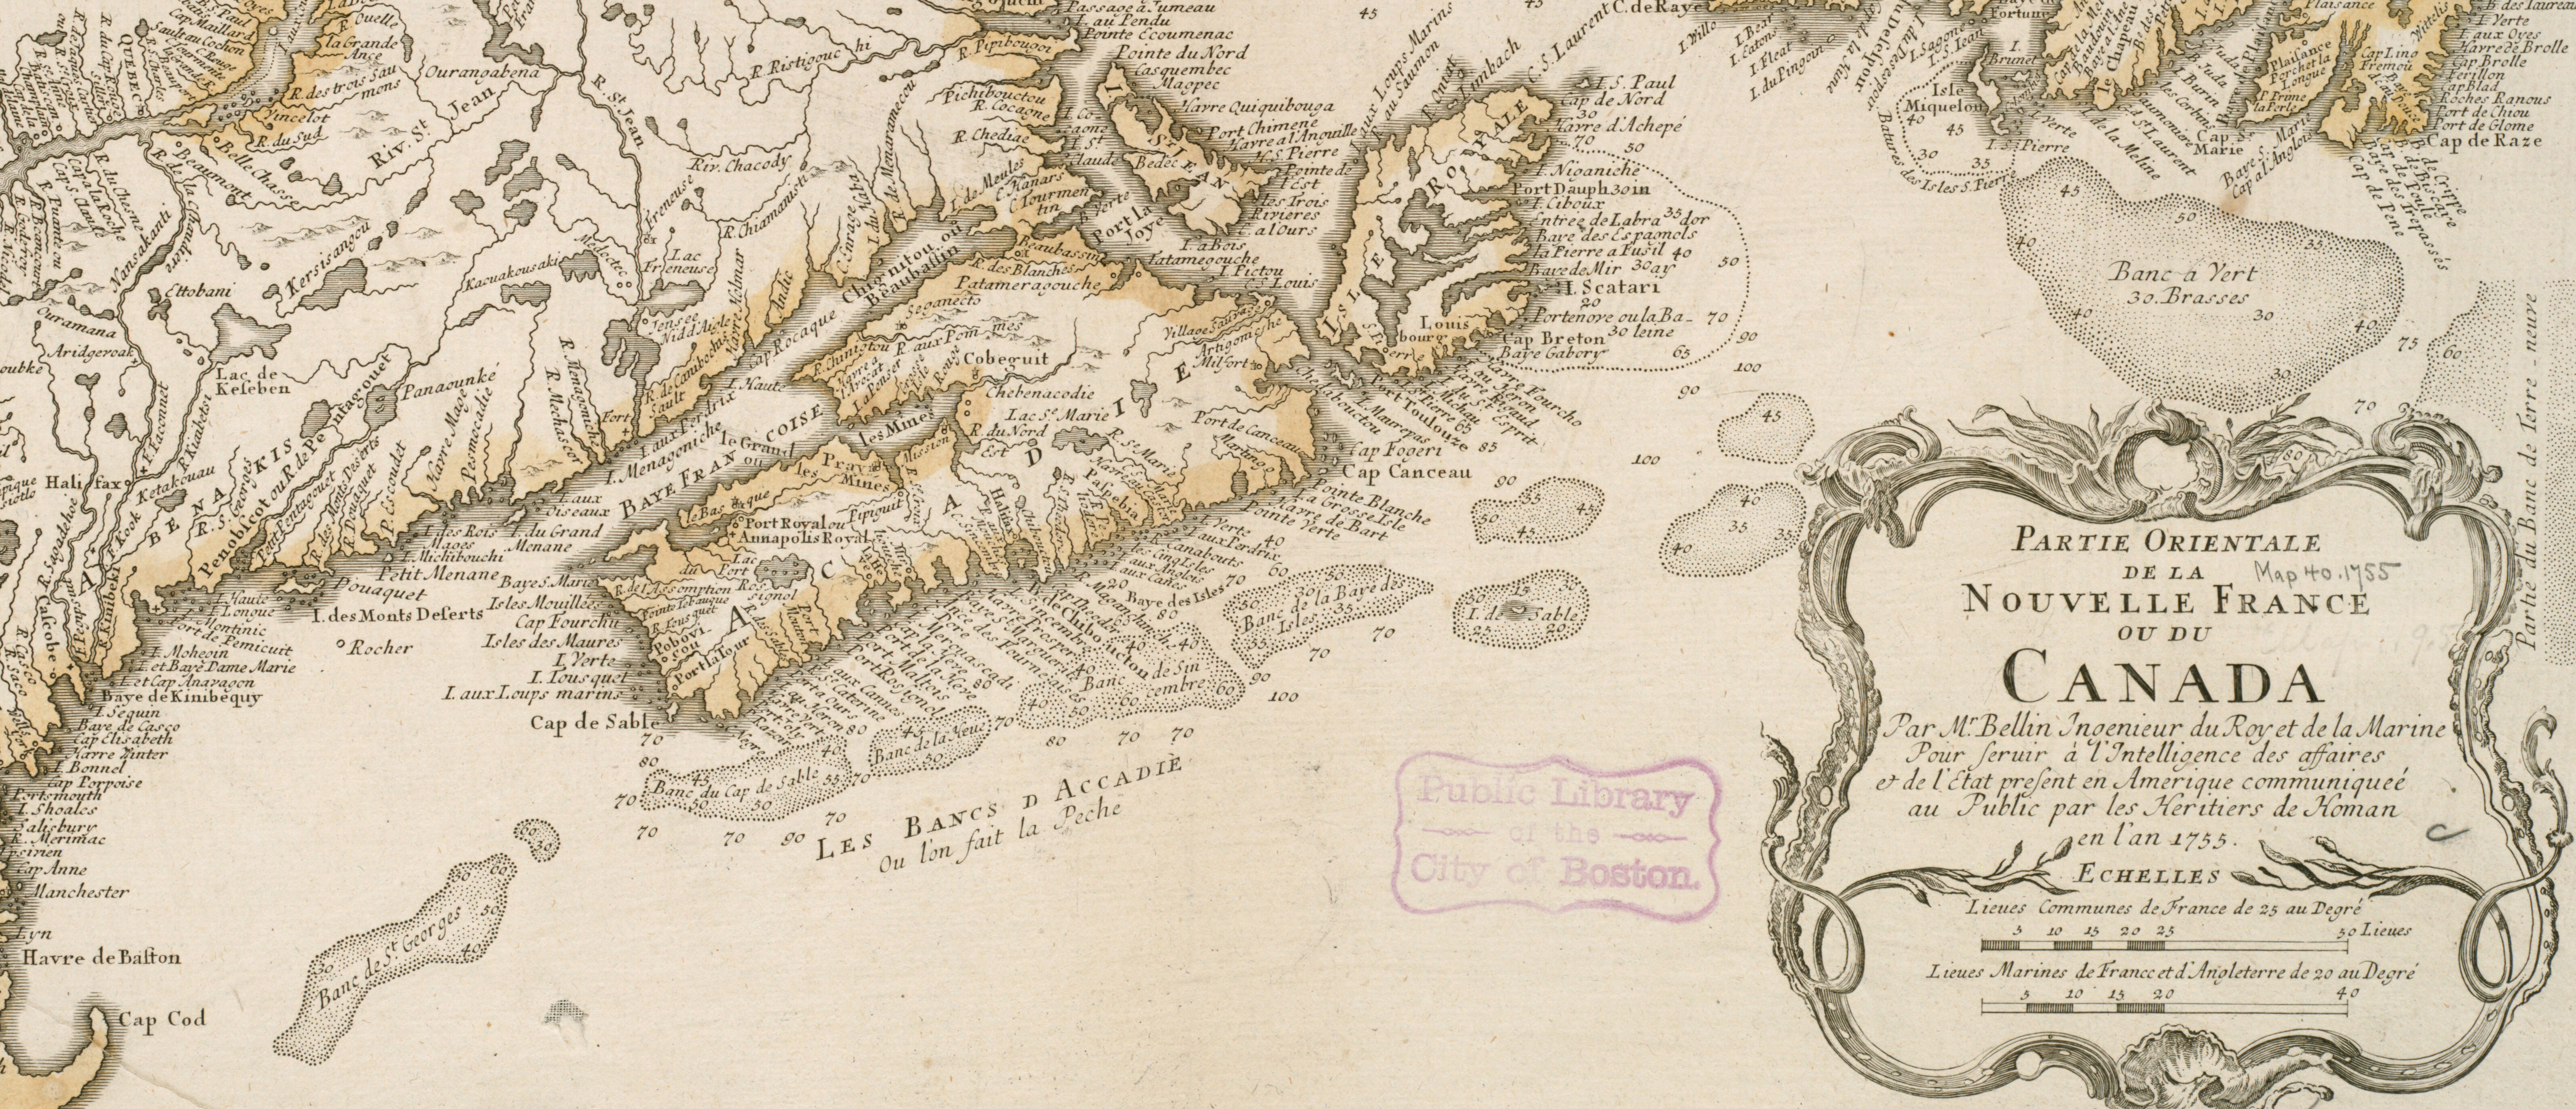 Detail of a map showing what is now Nova Scotia, New Brunswick, and part of Quebec, as well as a decorative cartouche reading Partie Orientale de le Nouvelle France ou du Canada